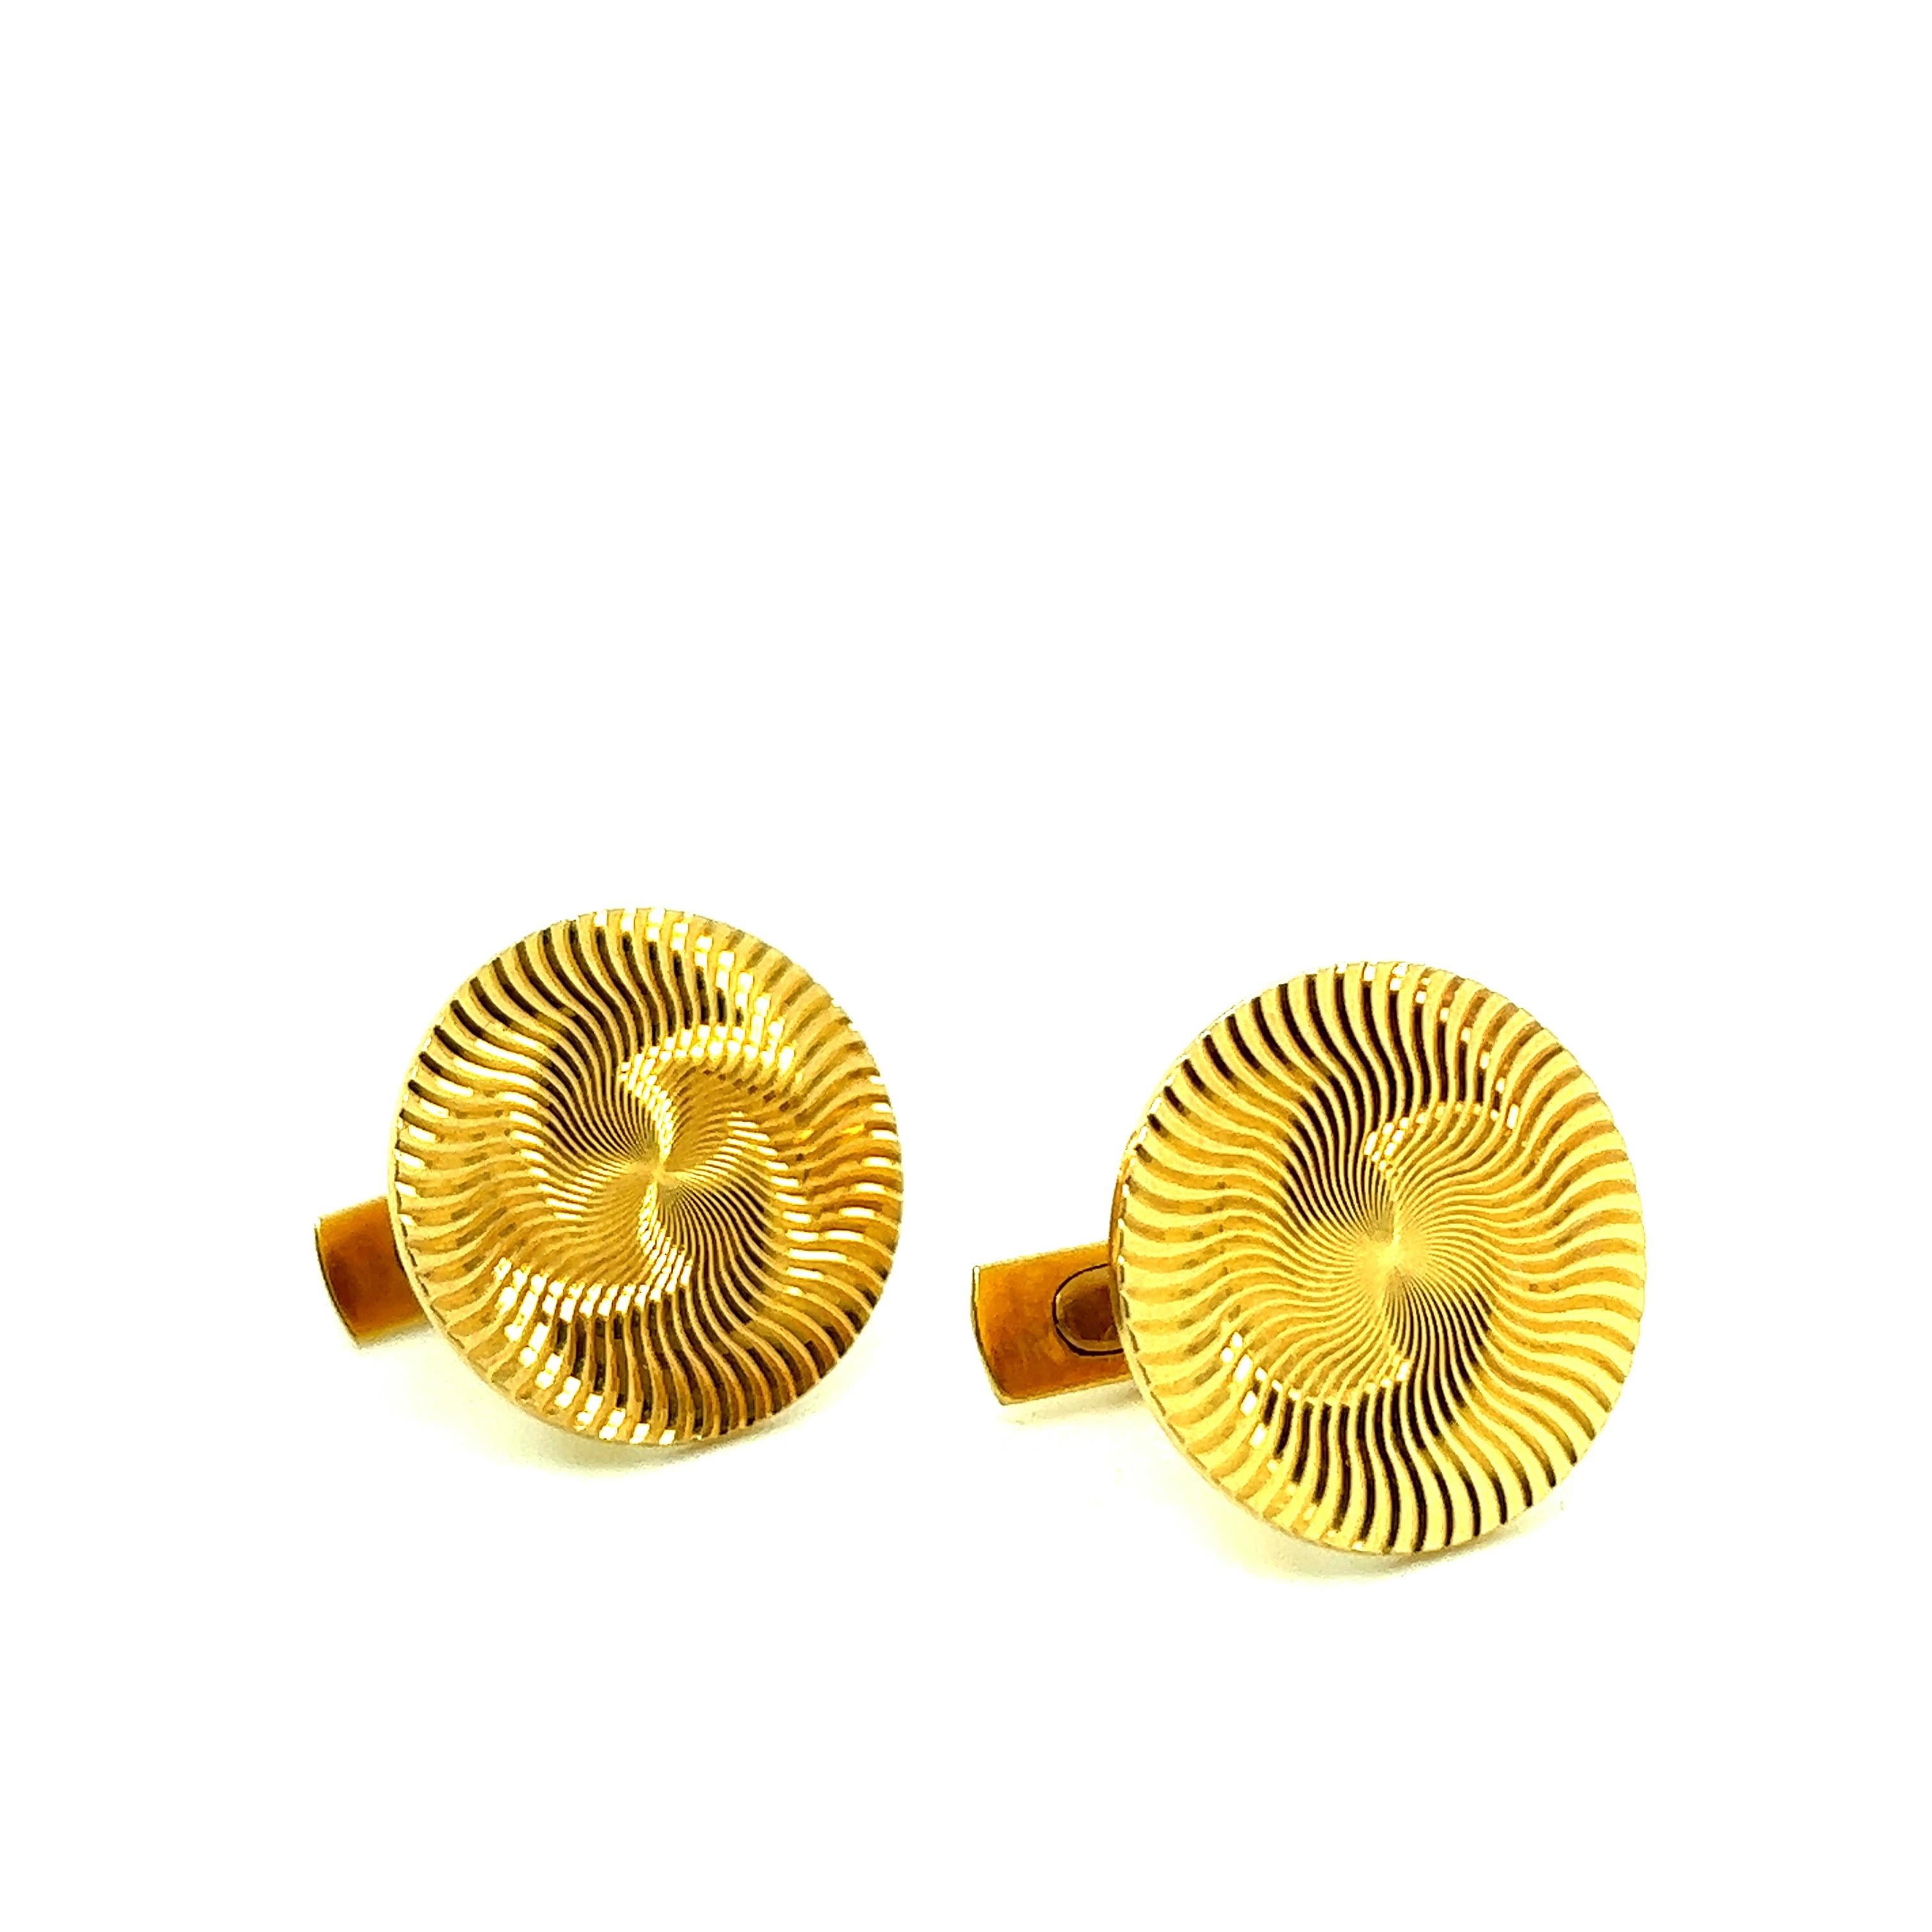 Bvlgari 18 karat yellow gold circle cufflinks that produce a unique design. Circa 1970s. Marked: Bvlgari / Italy / 18kt. Total weight: 21.2 grams. 